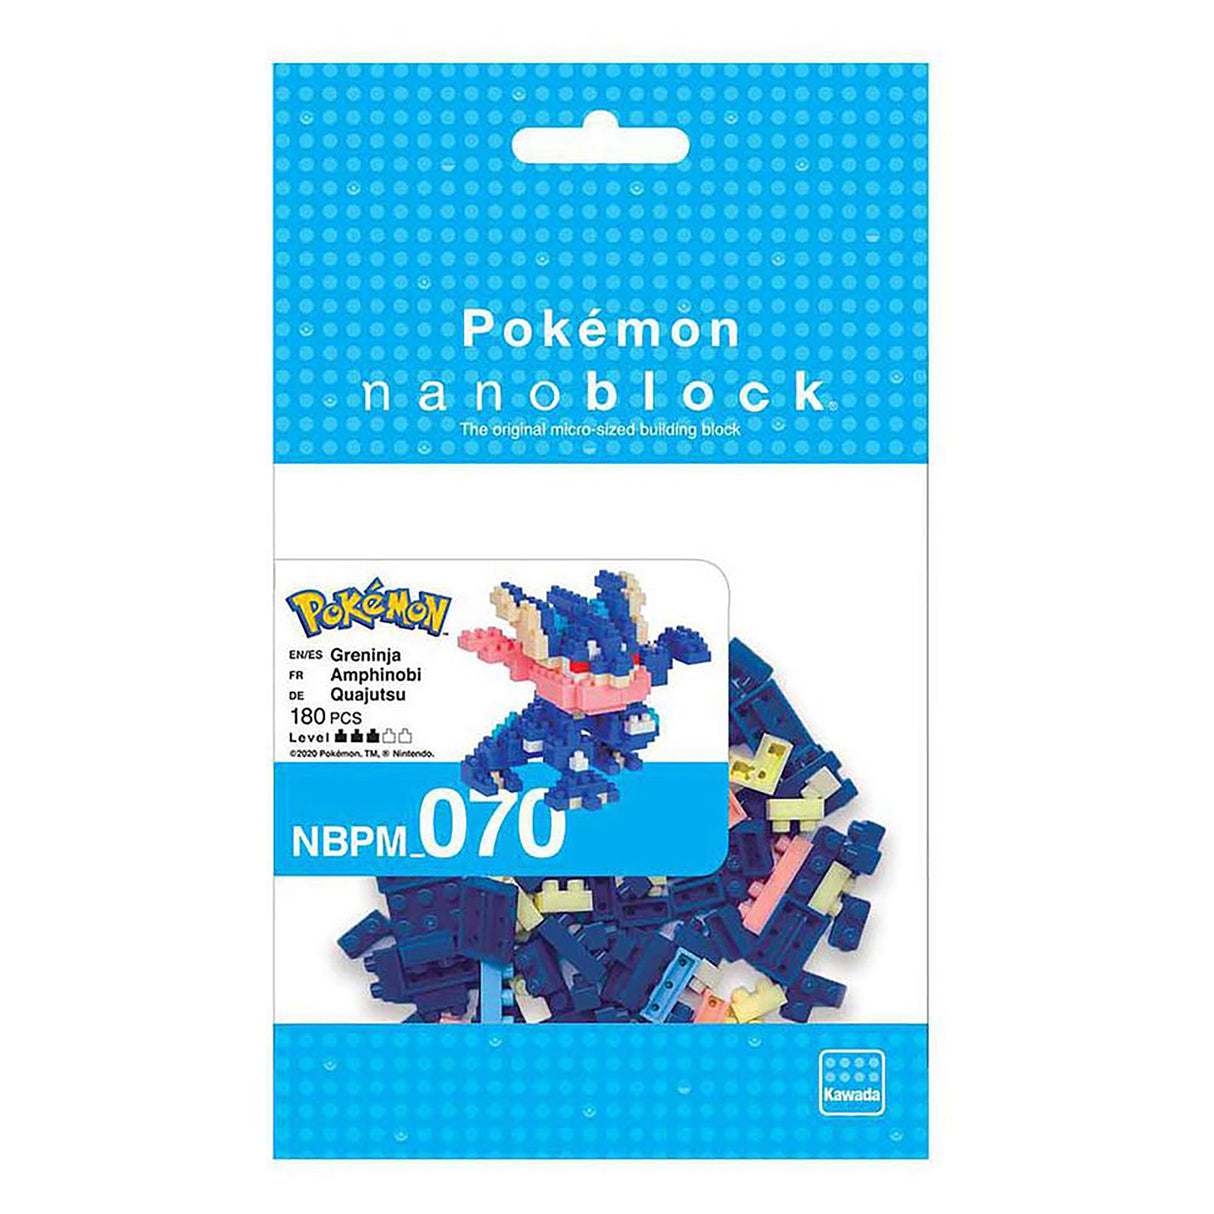 nanoblock Pokemon - Greninja (180 pieces)